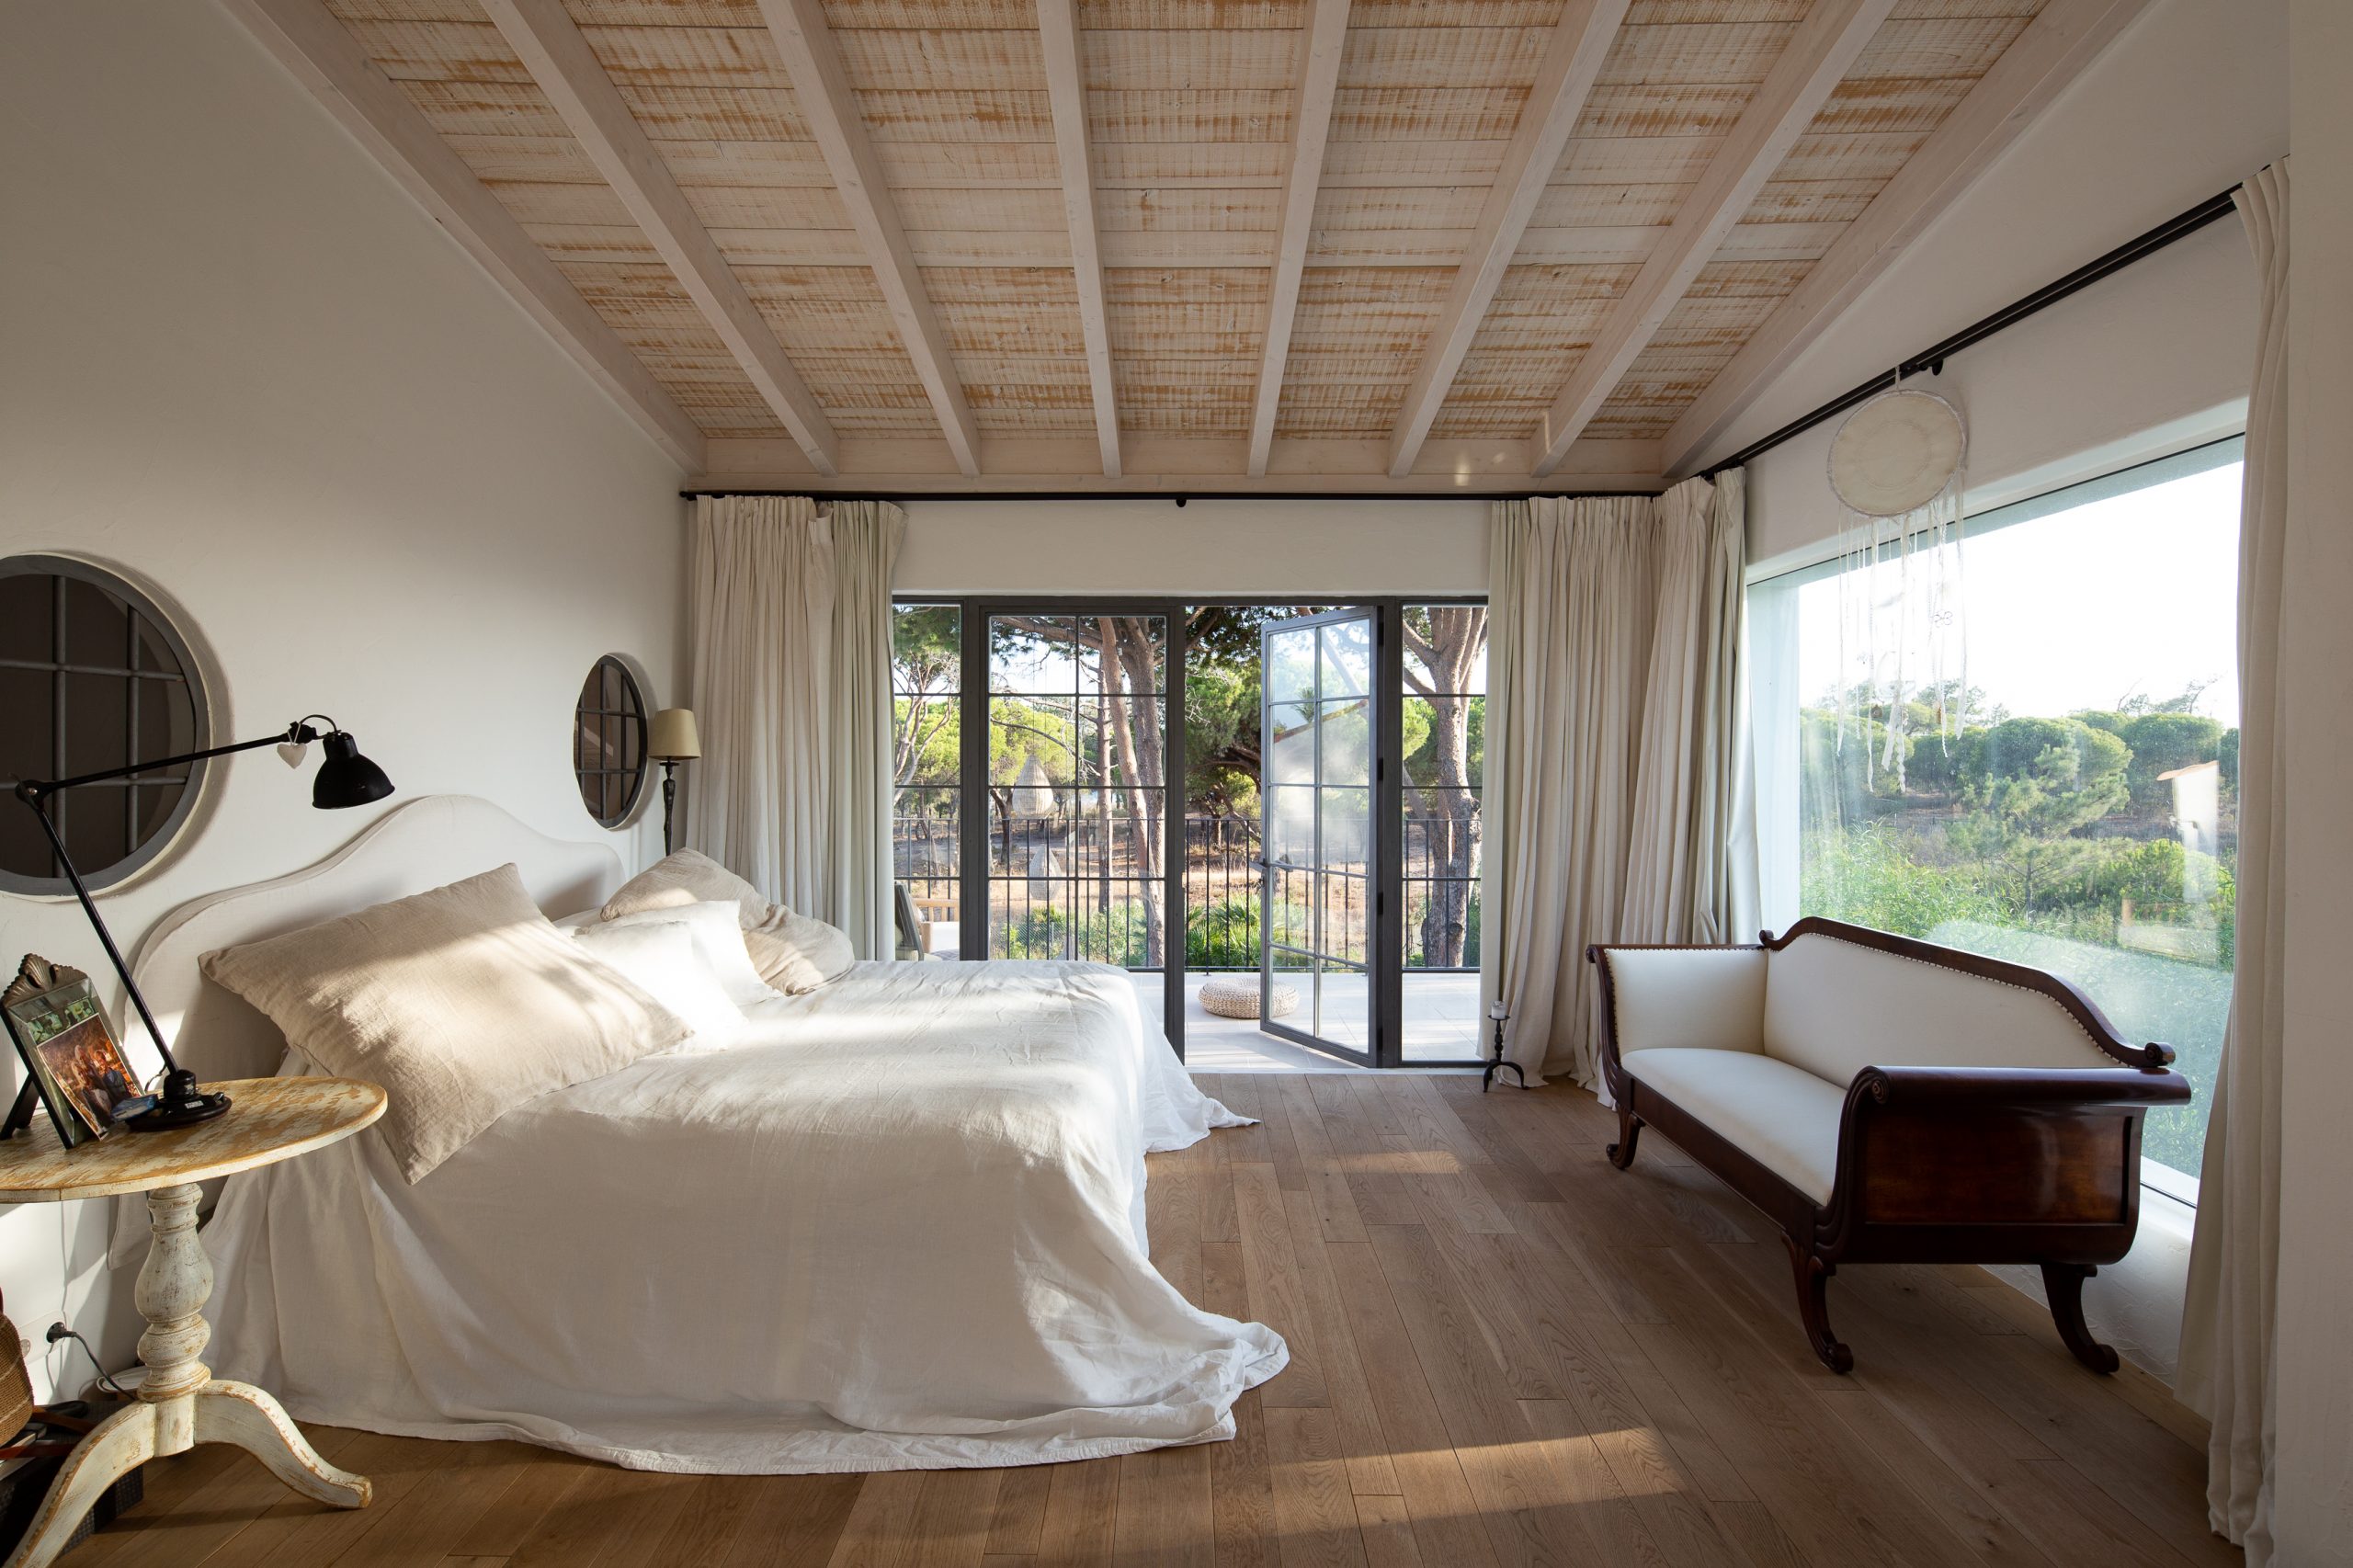 Dream beachhouse bedroom inspo - CORE architects